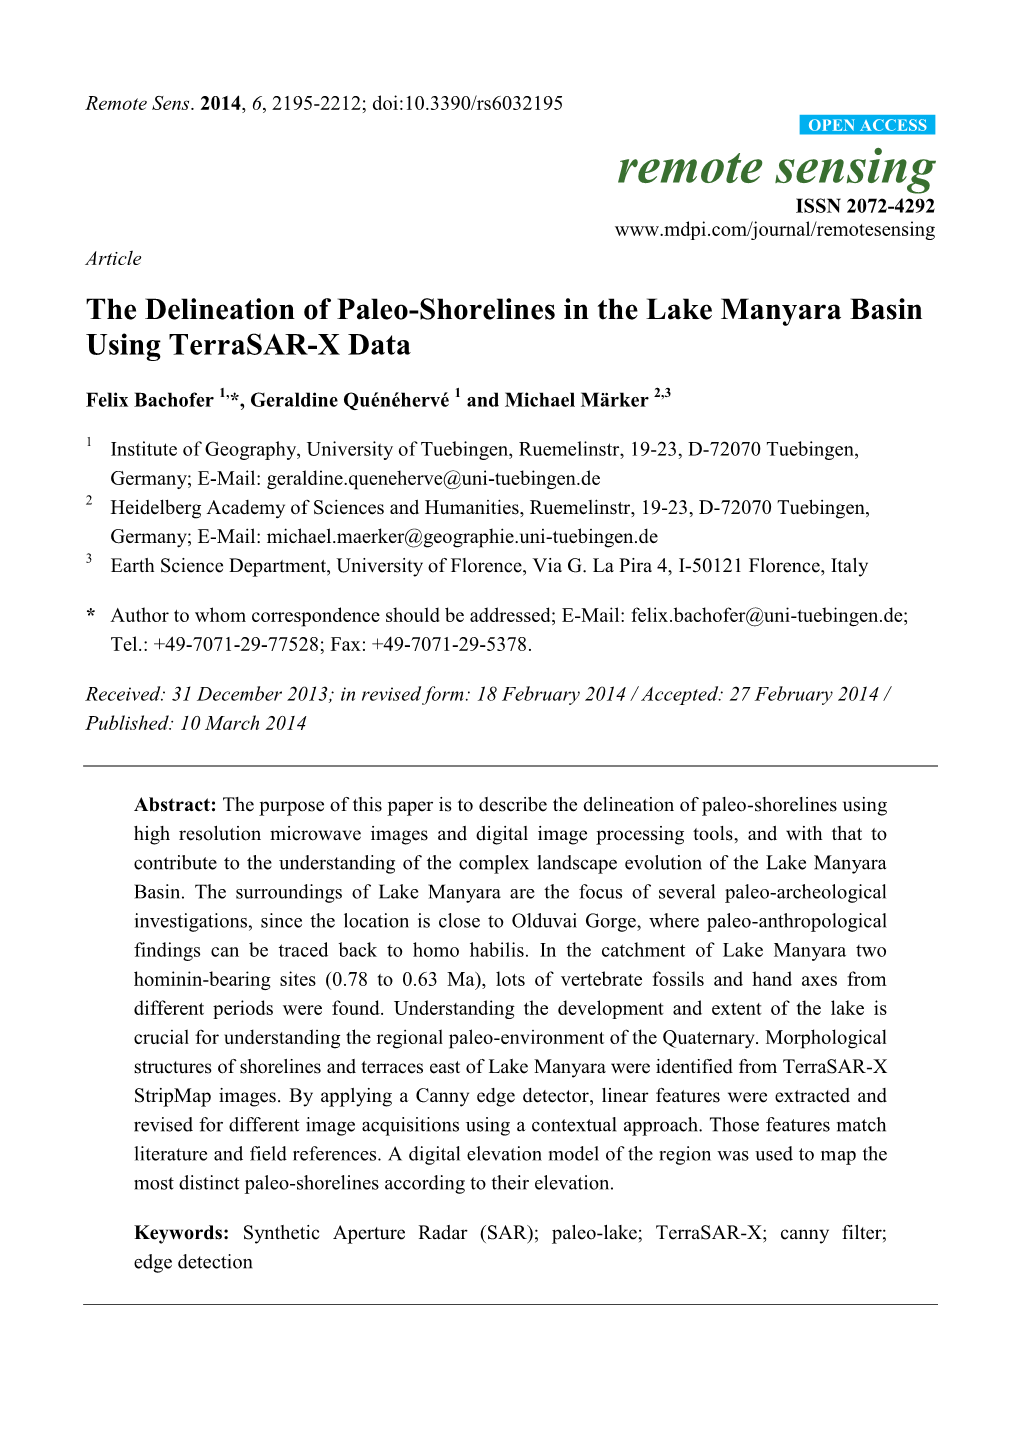 The Delineation of Paleo-Shorelines in the Lake Manyara Basin Using Terrasar-X Data